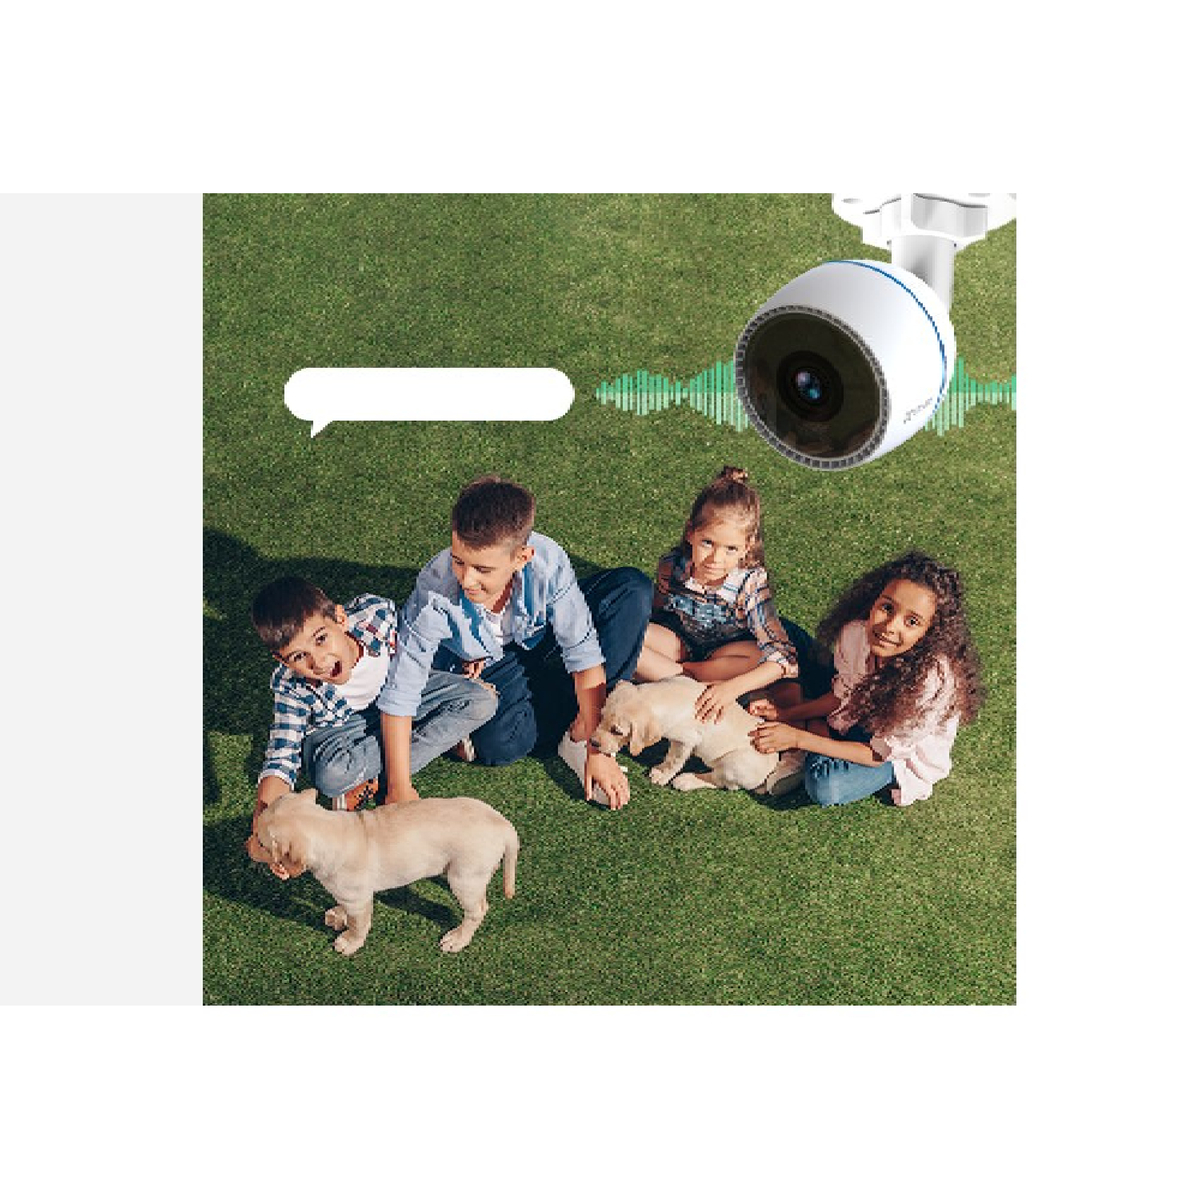 Ezviz H3c Wi-Fi Smart Home Security Camera, White, CS-H3c-R100-1K2WF